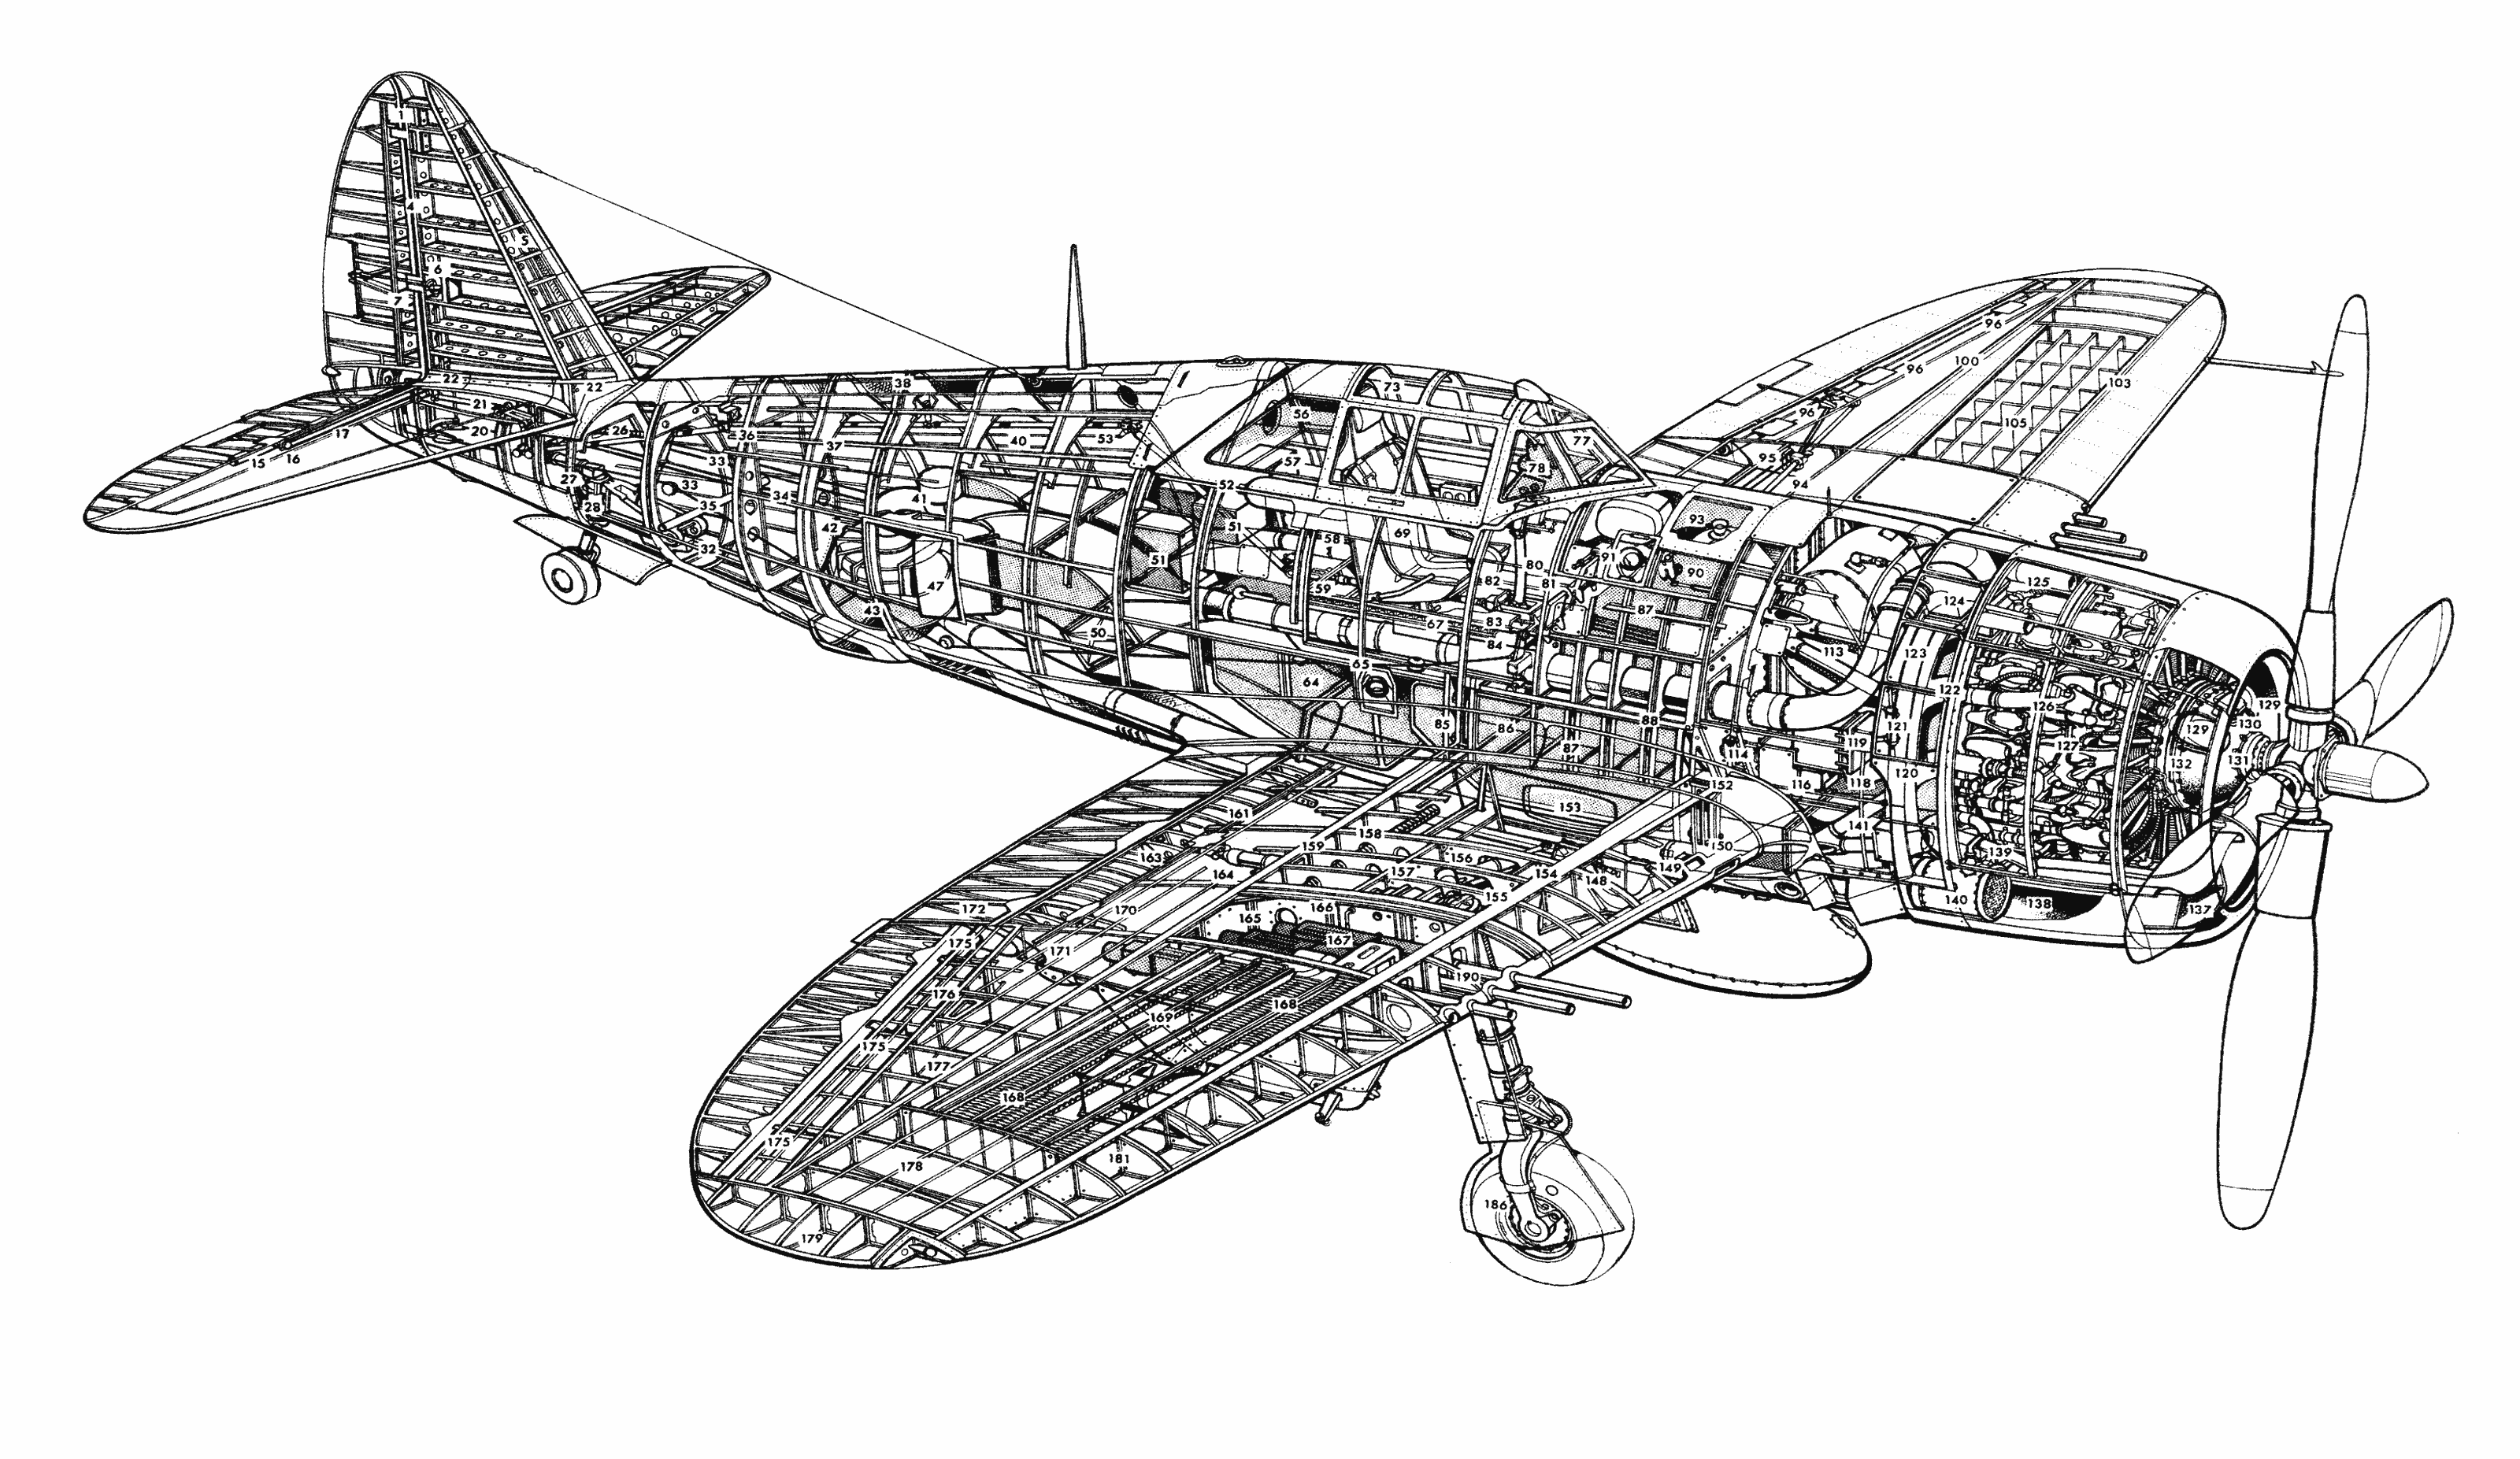 P-47 Thunderbolt cutaway drawing